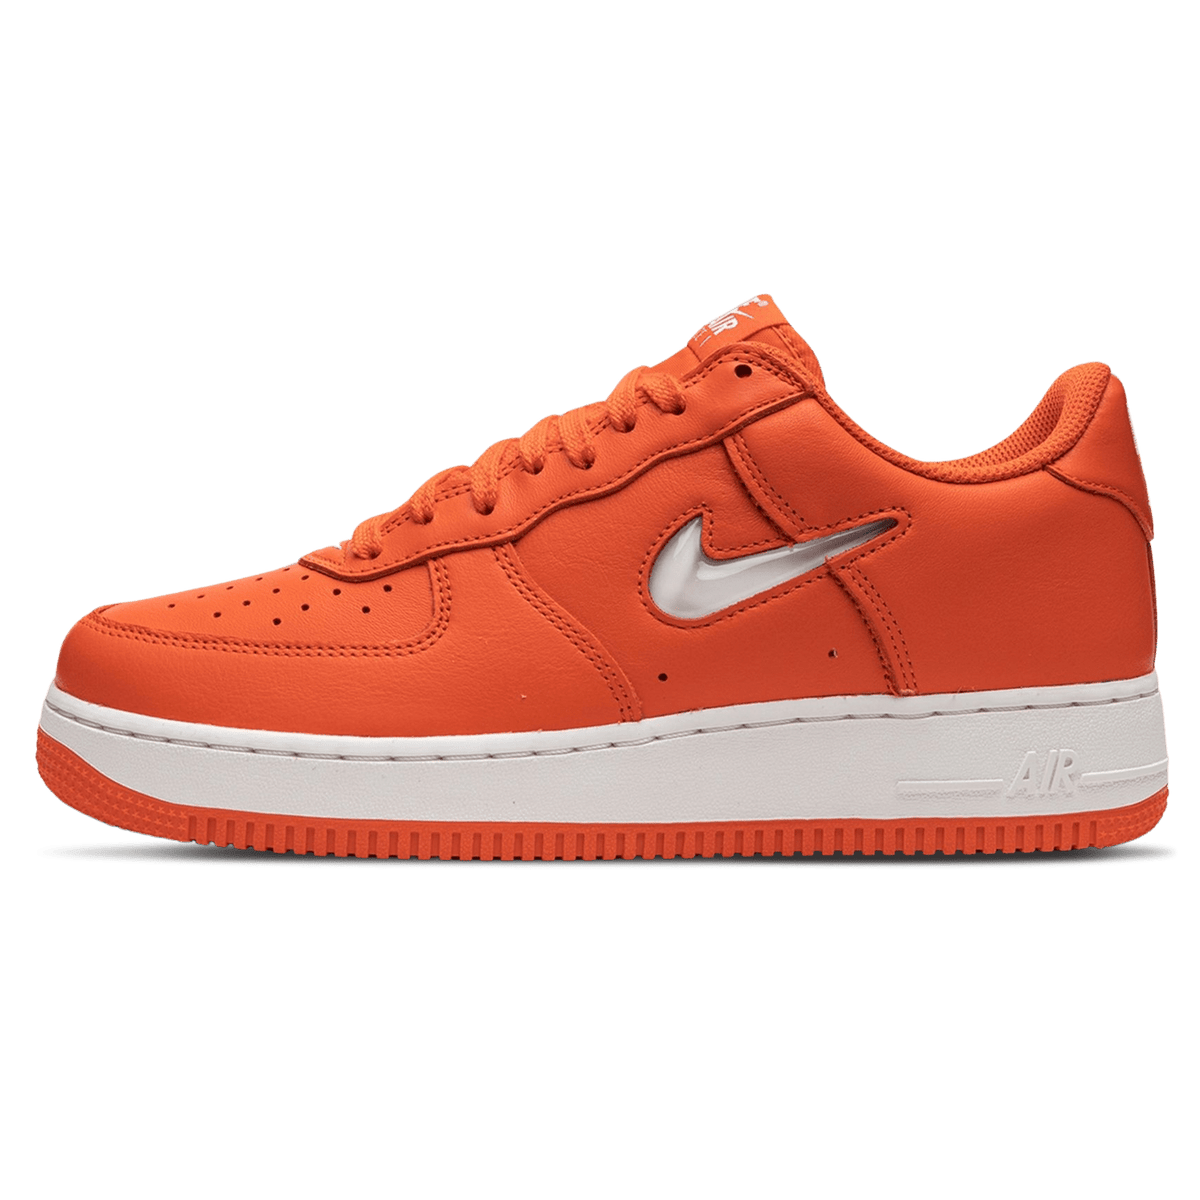 Nike Air Force 1 &07 LV8 JDI Leather Orange